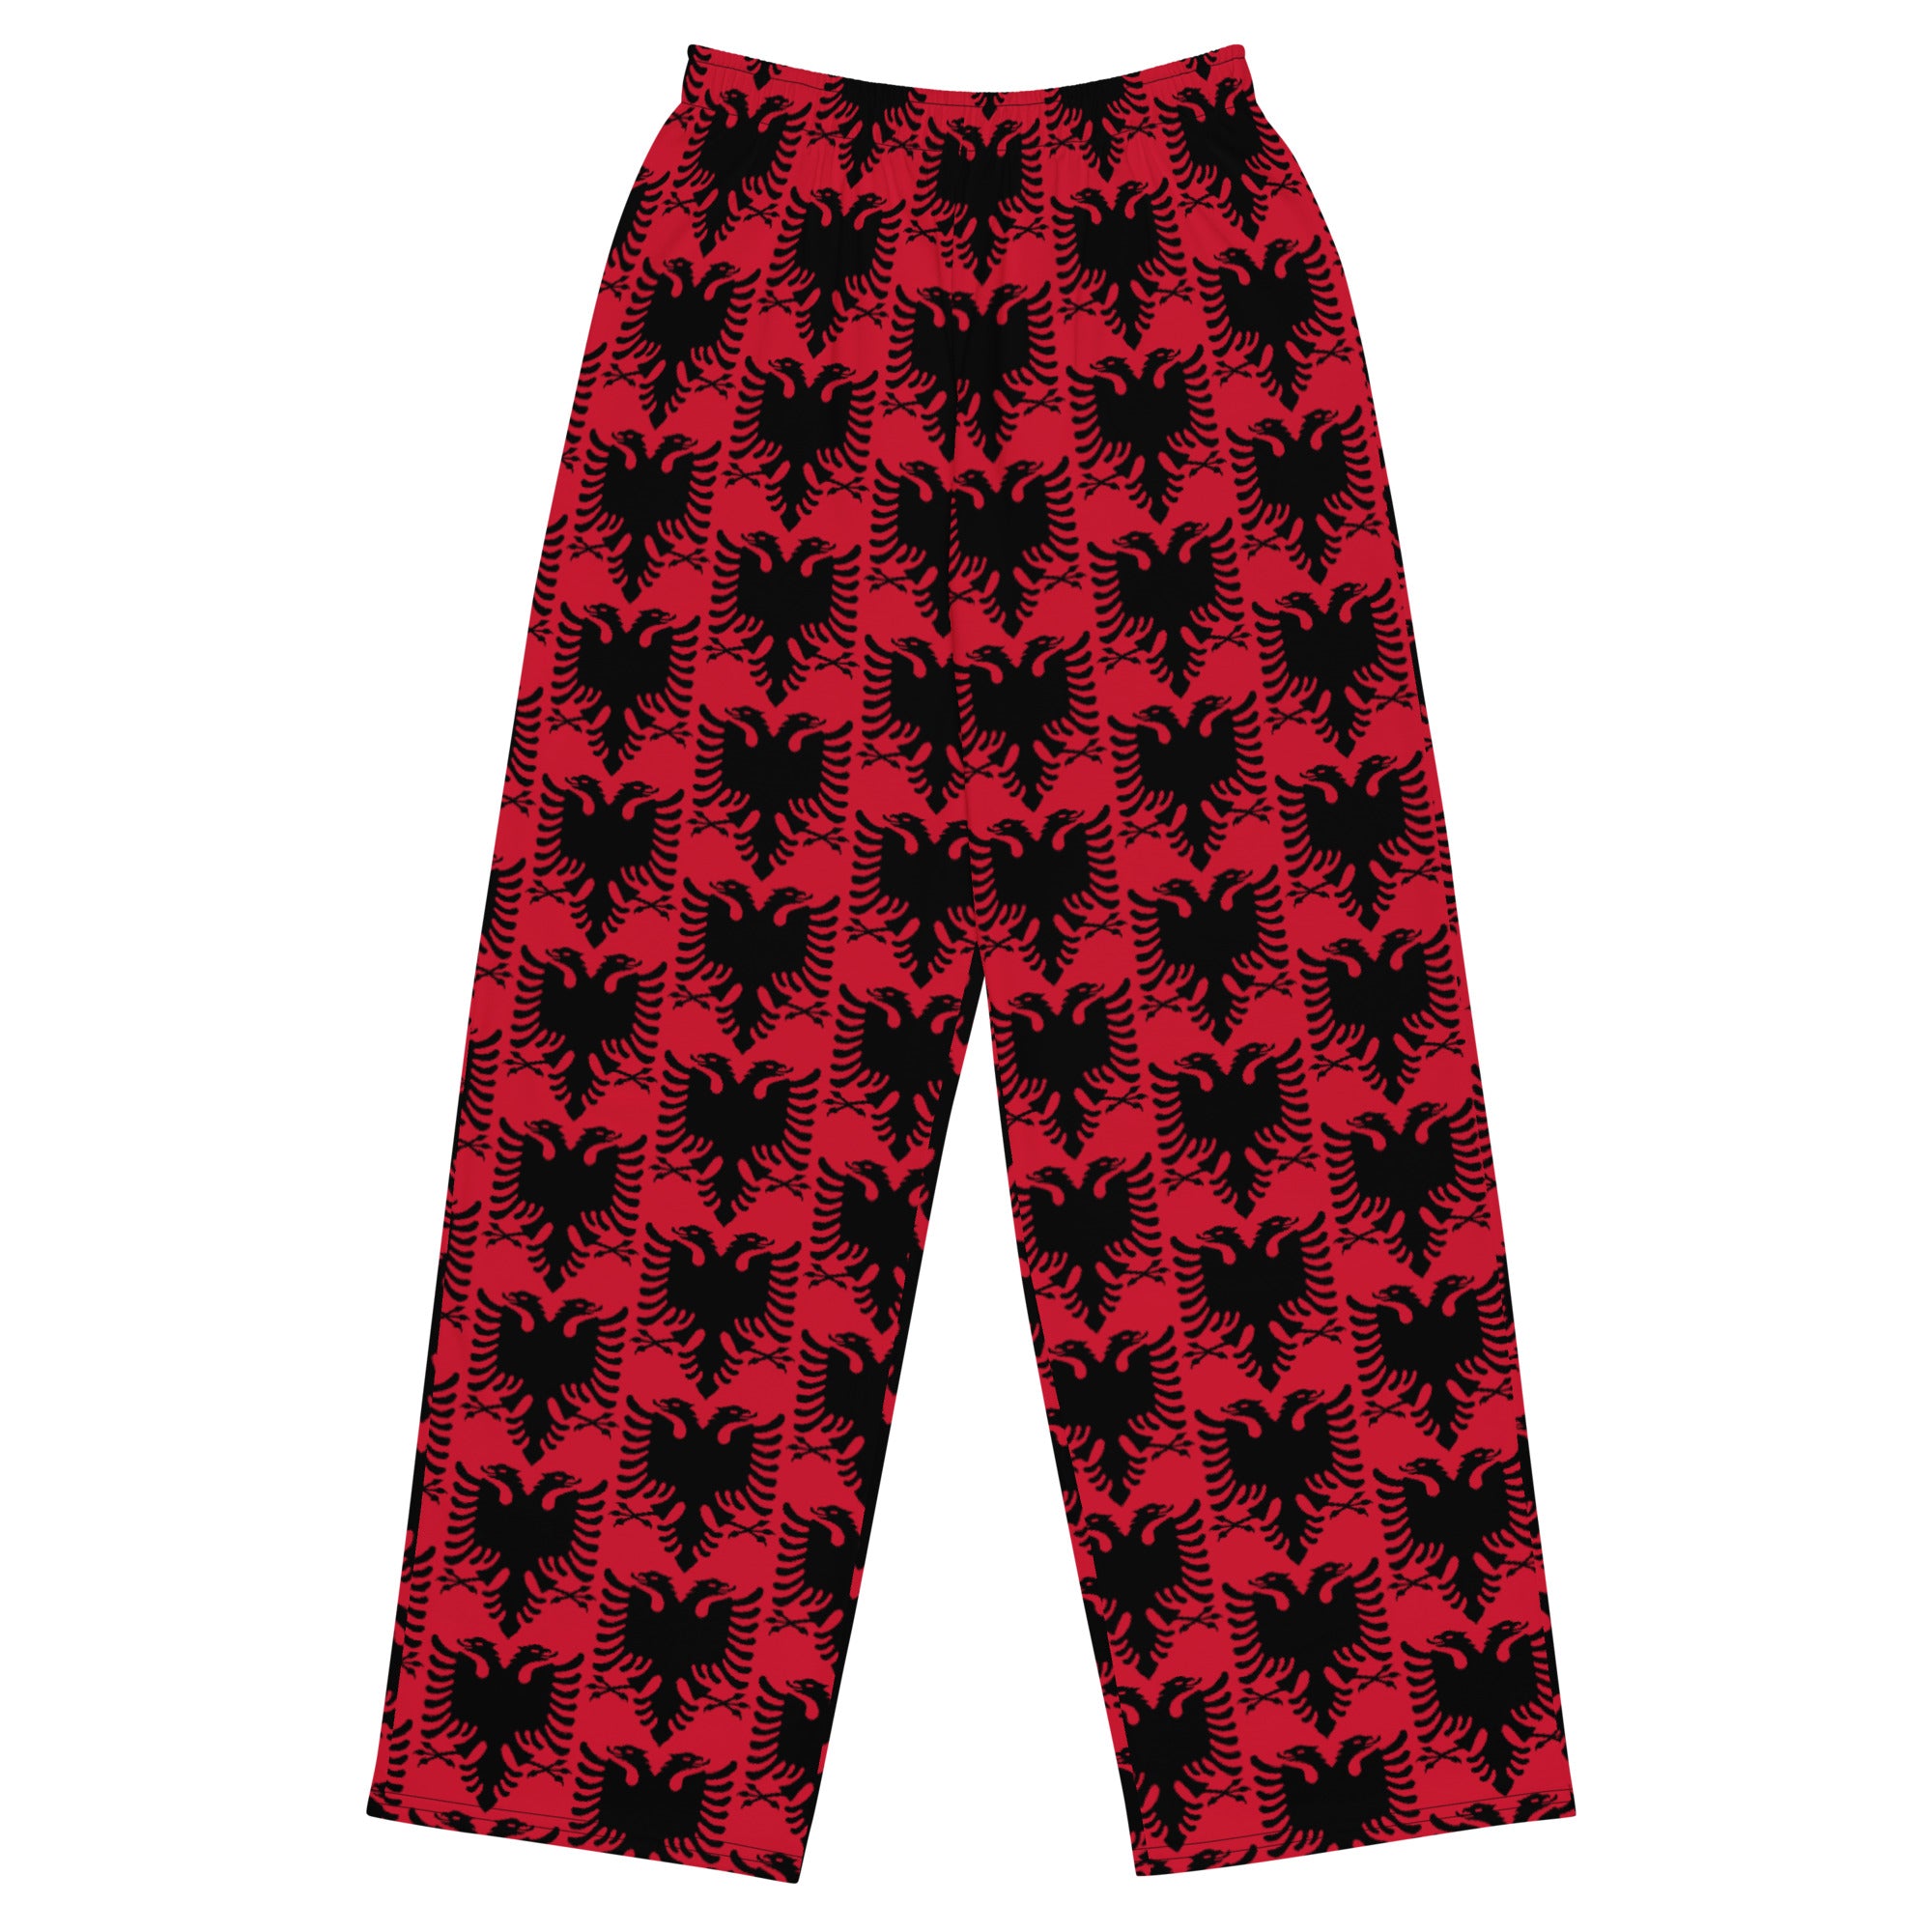 Albanian flag unisex Christmas pants